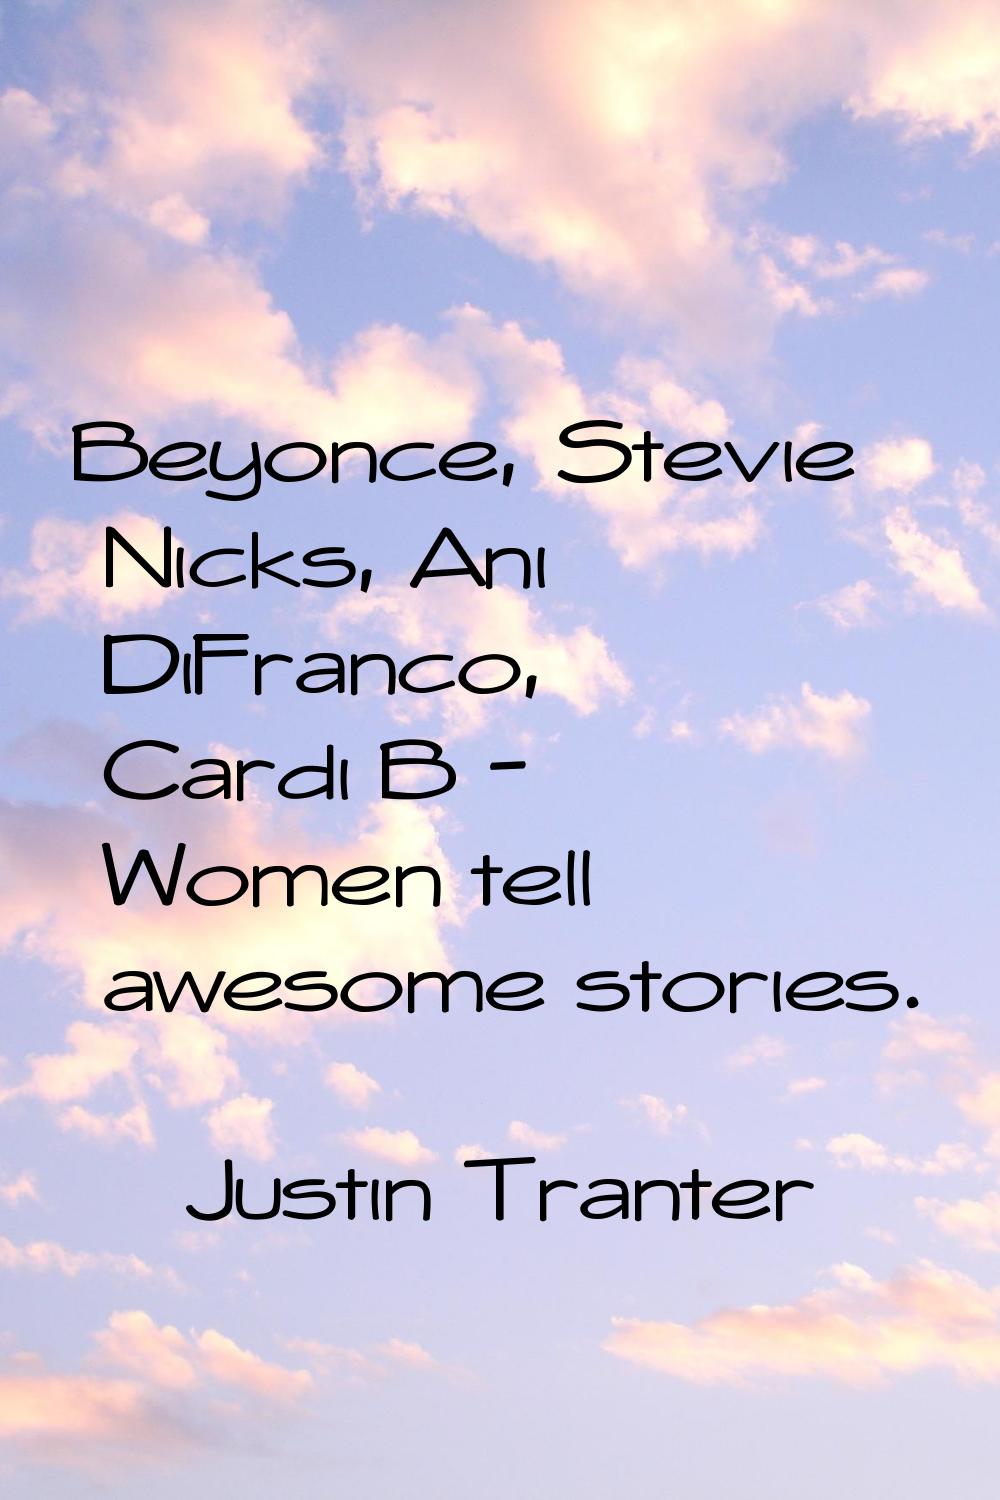 Beyonce, Stevie Nicks, Ani DiFranco, Cardi B - Women tell awesome stories.